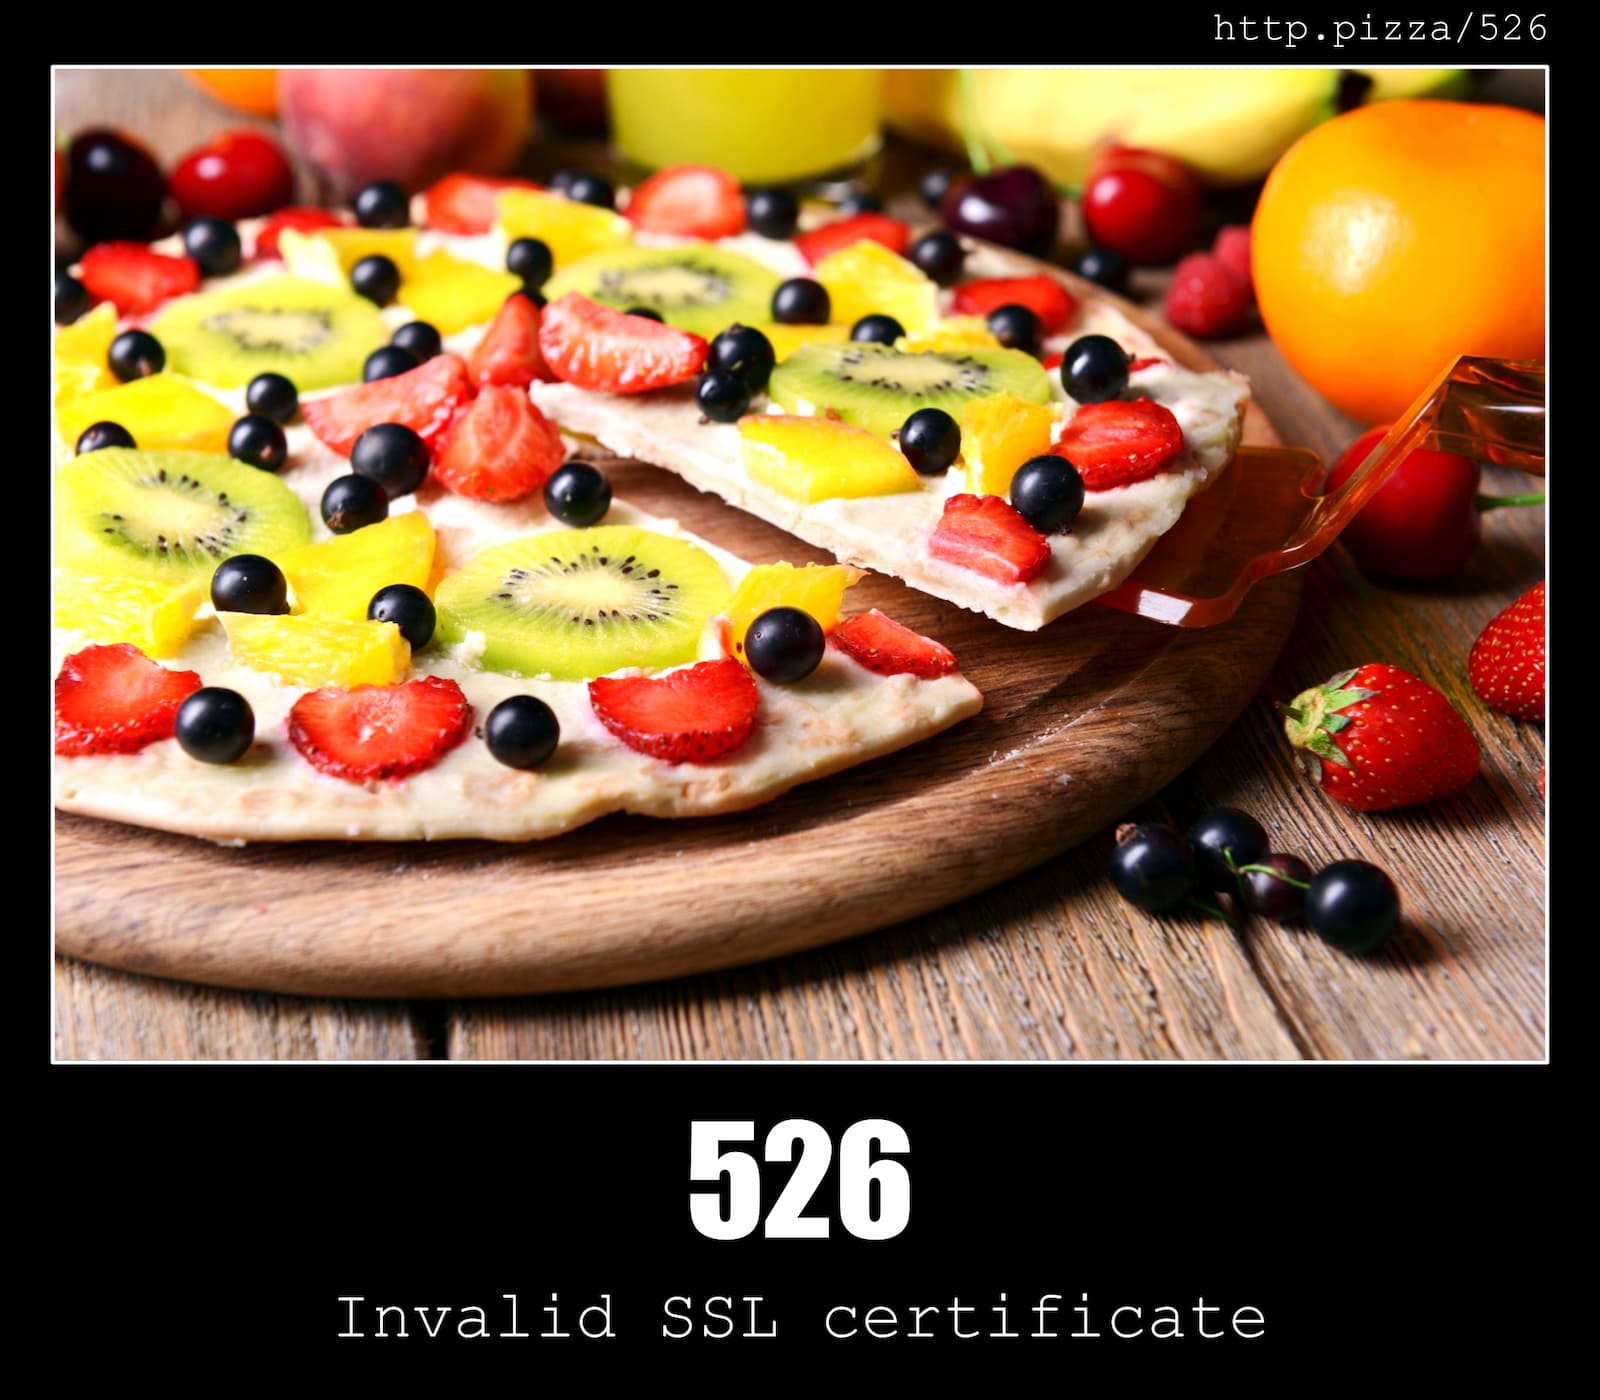 HTTP Status Code 526 Invalid SSL certificate & Pizzas